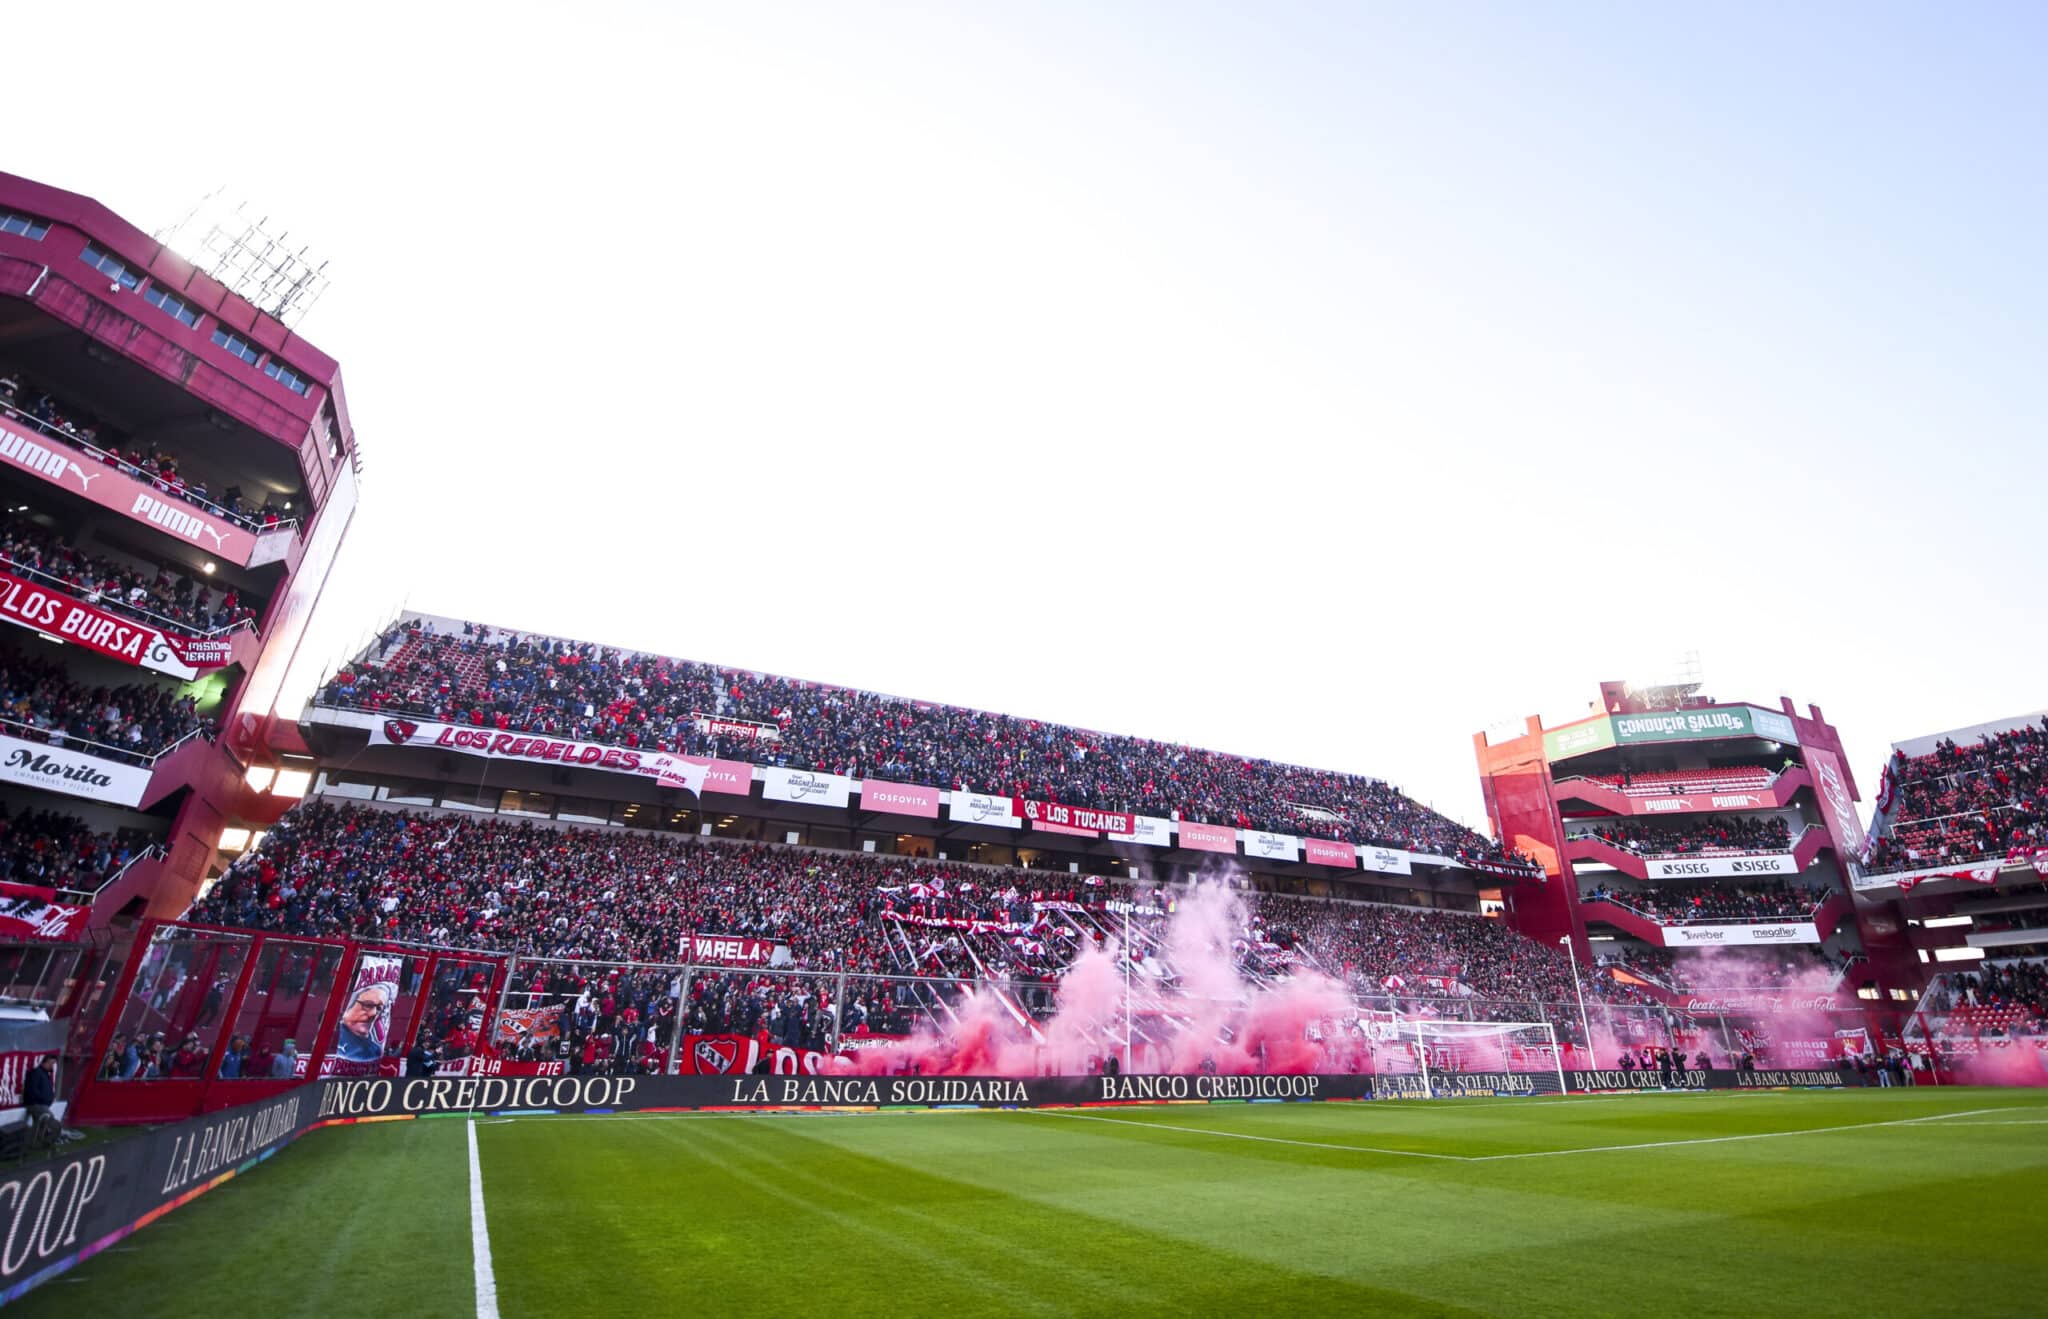 Independiente's sea of red in the stadium